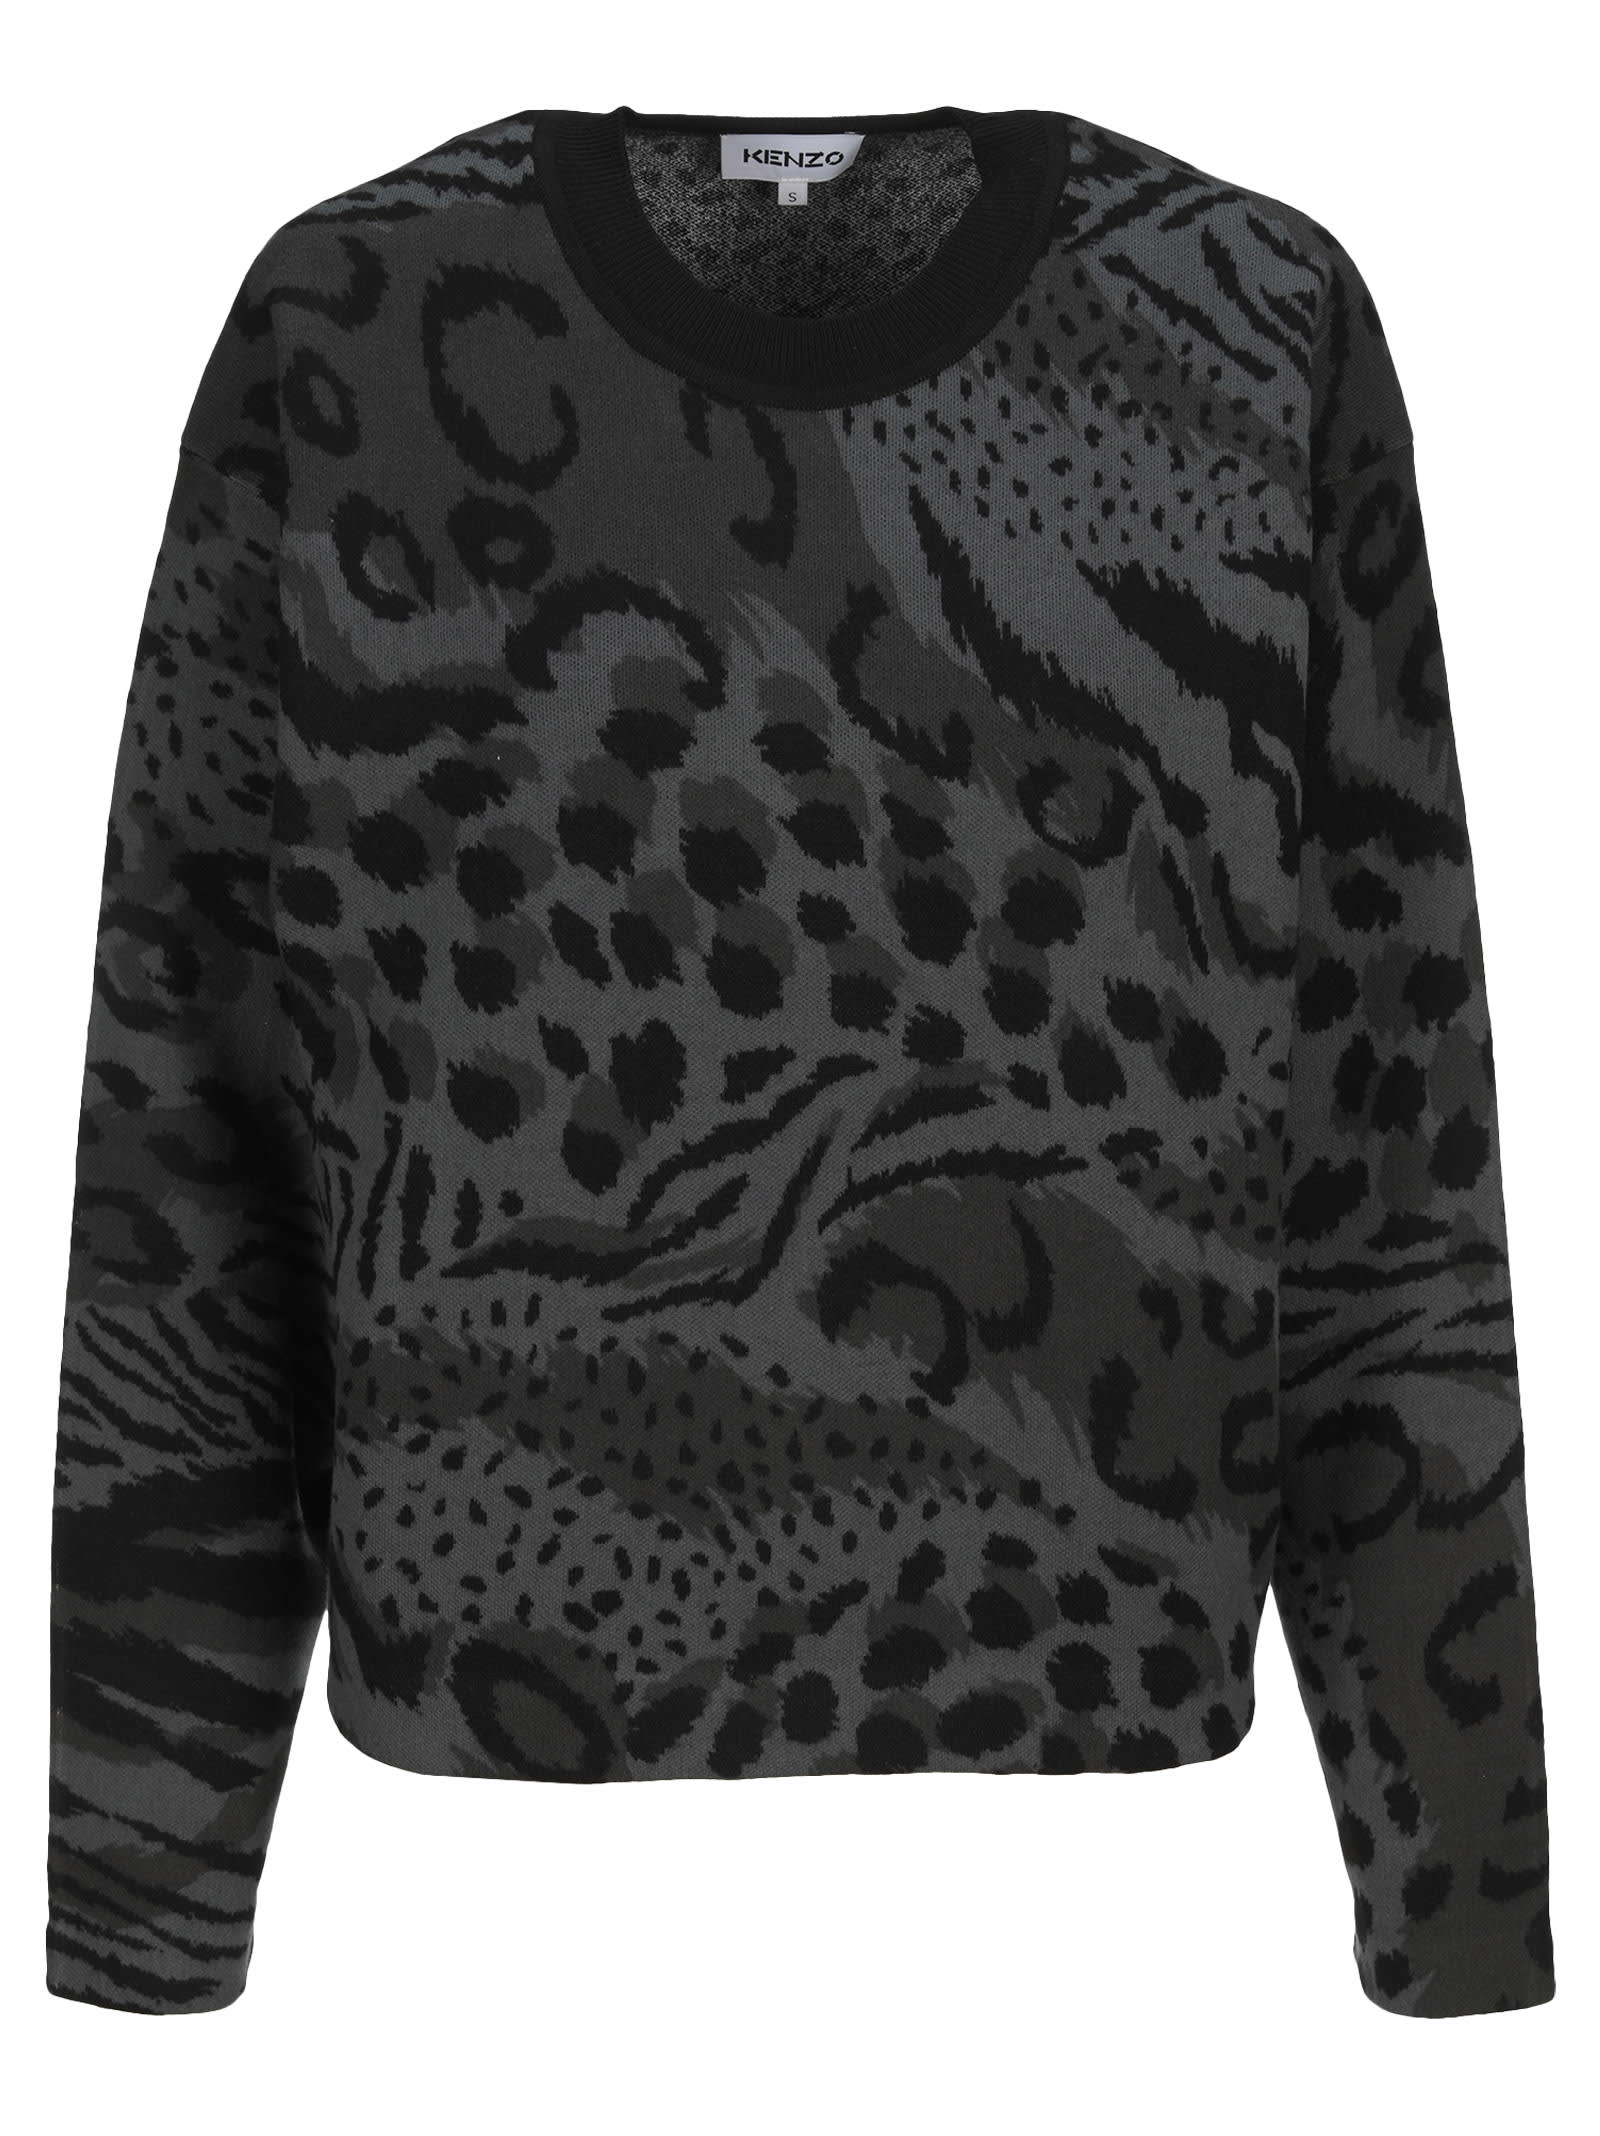 Kenzo cheetah Leopard Wool Blend Sweatshirt